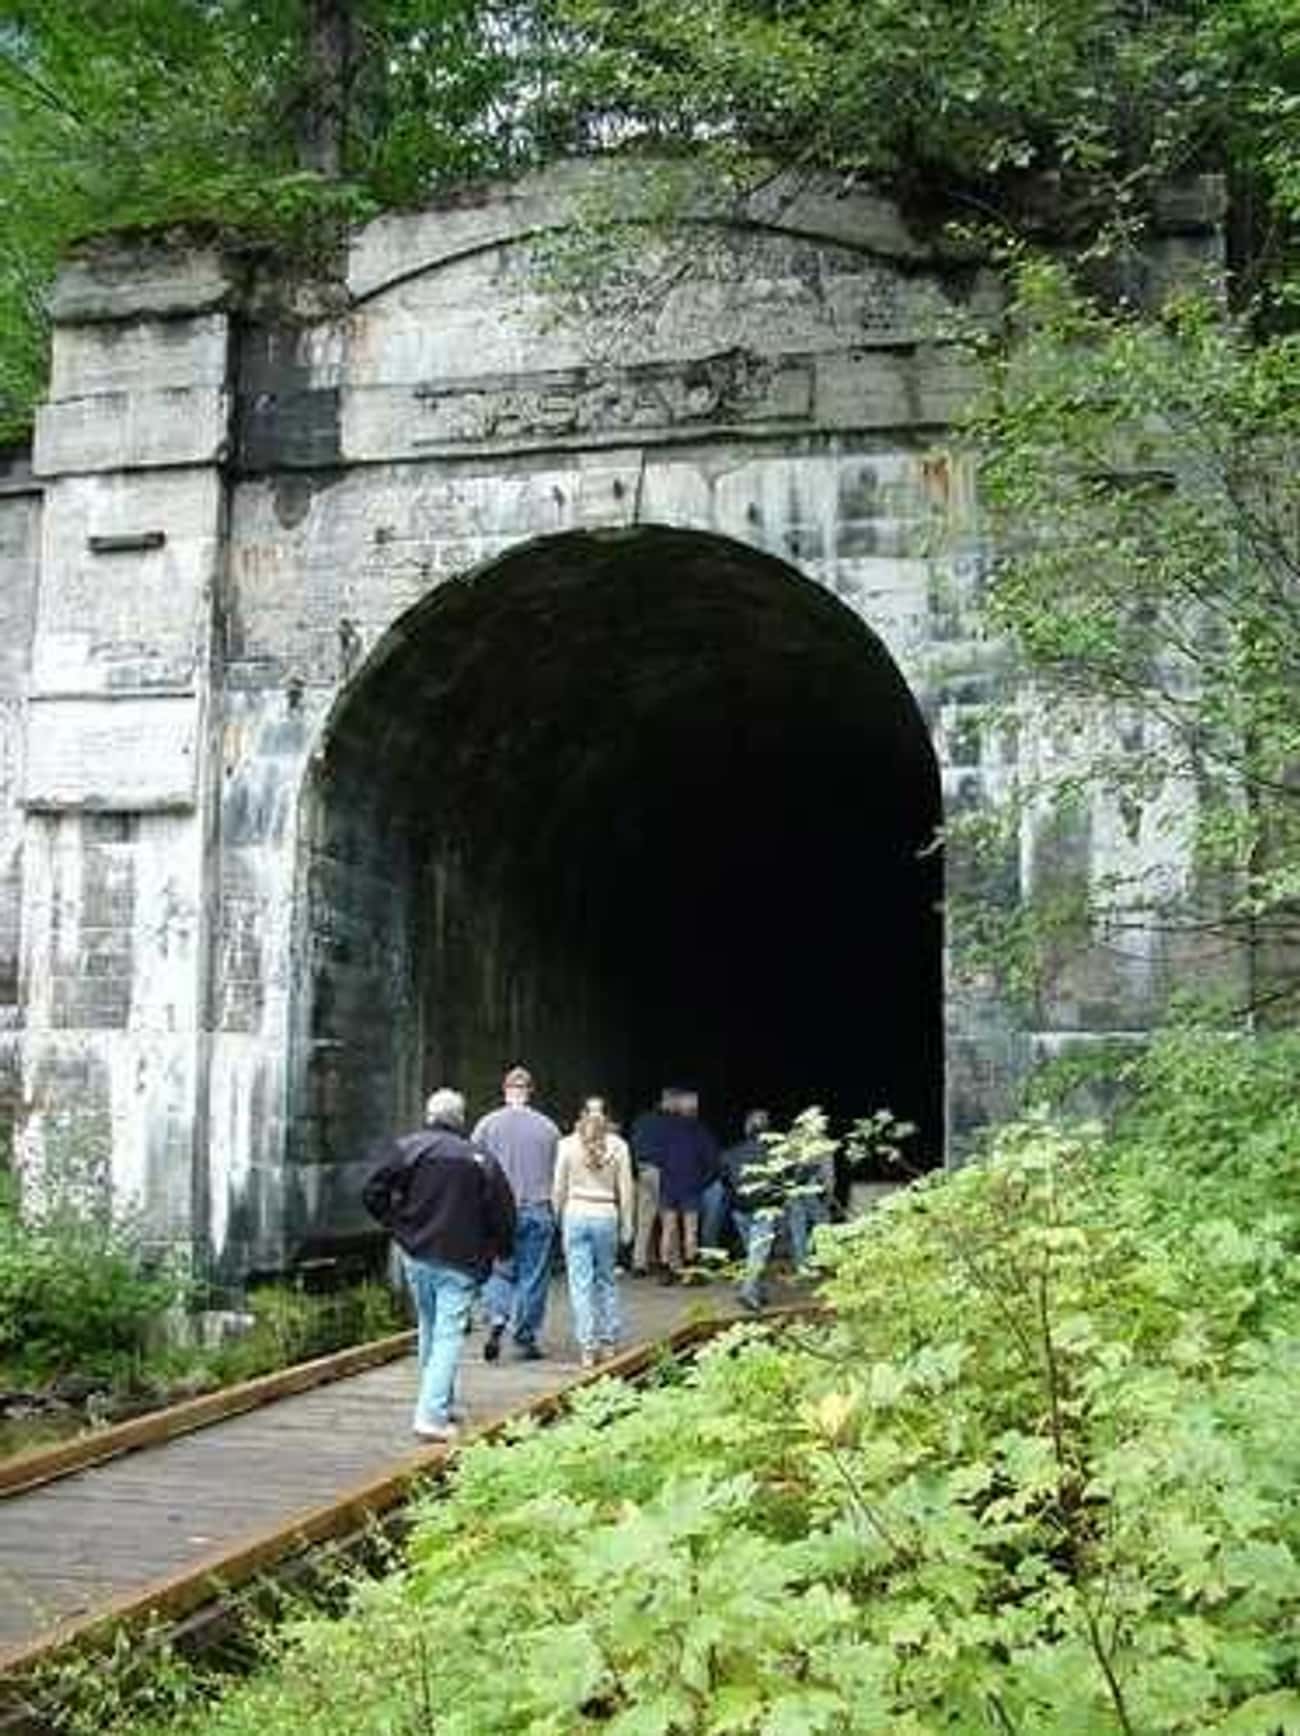 A Trainload Of Passengers Perished On Iron Goat Trail, Washington